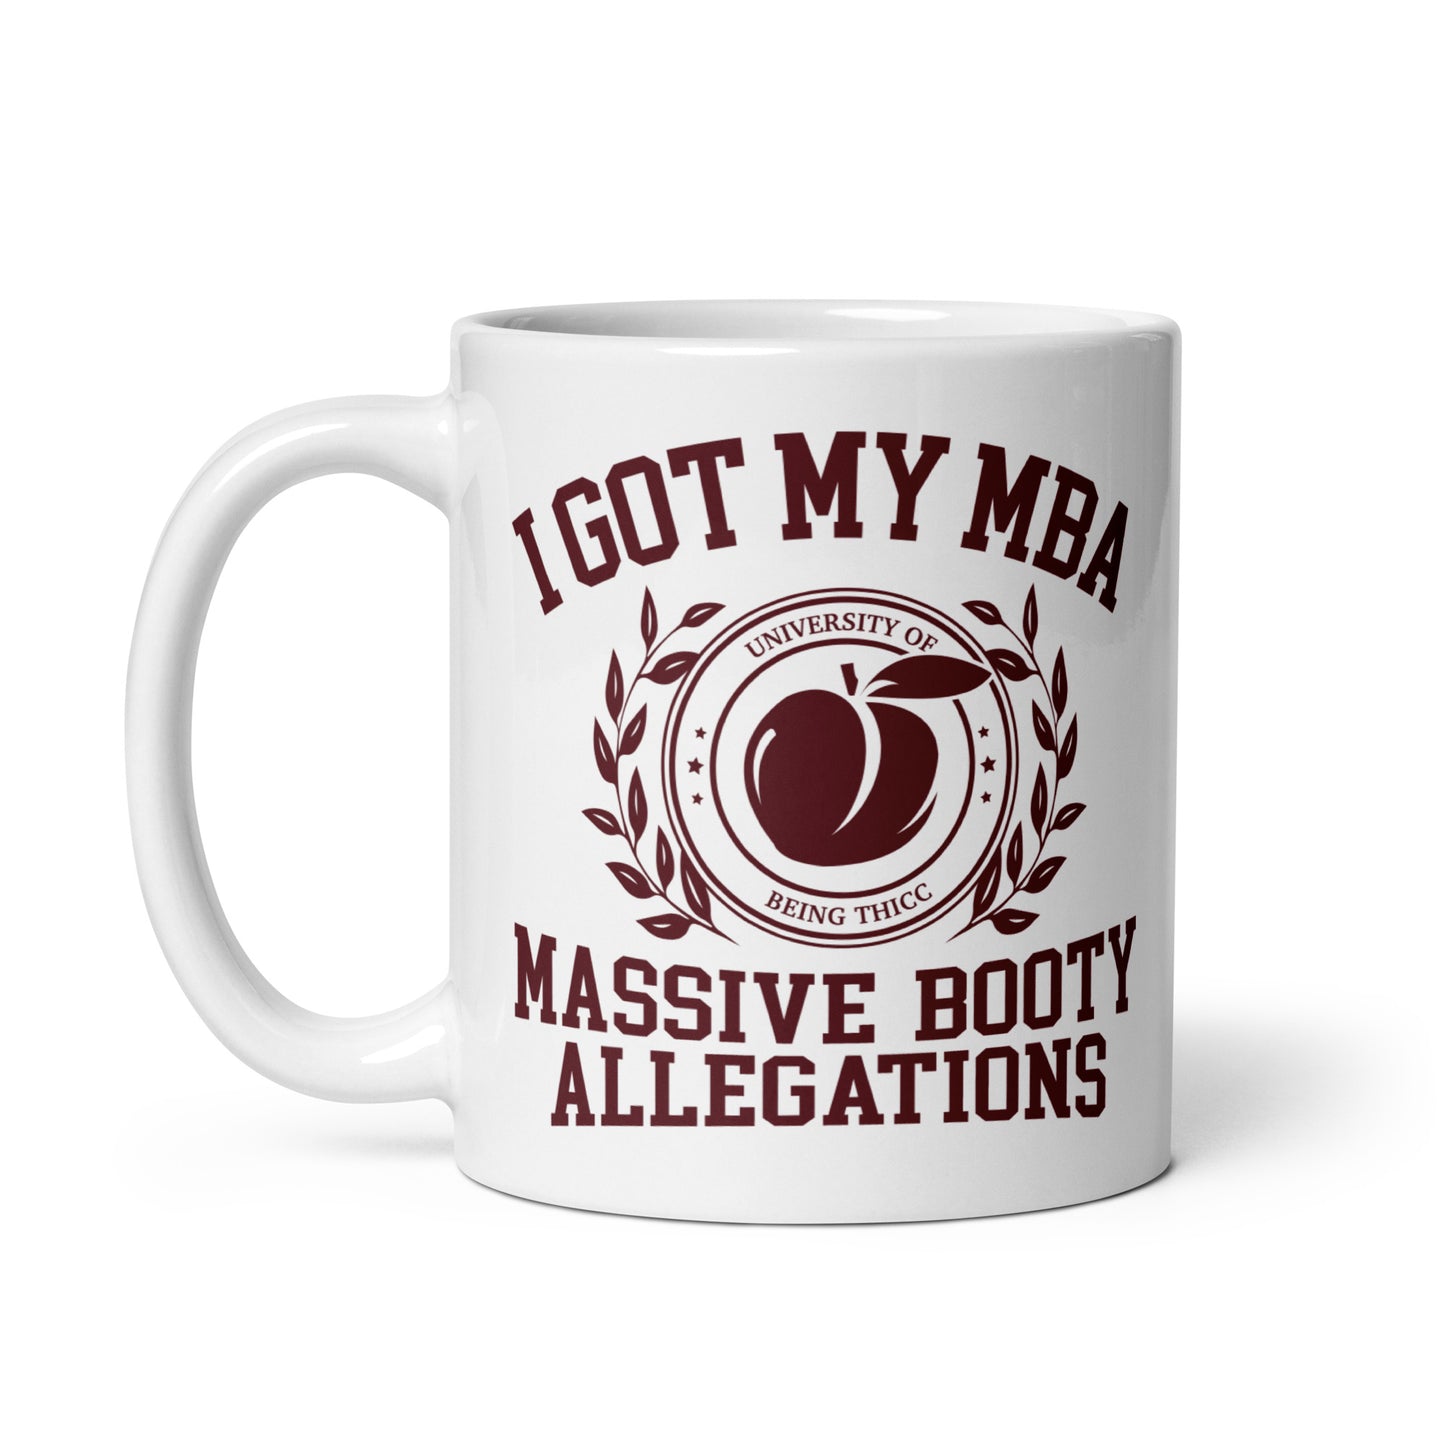 Massive Booty Allegations mug